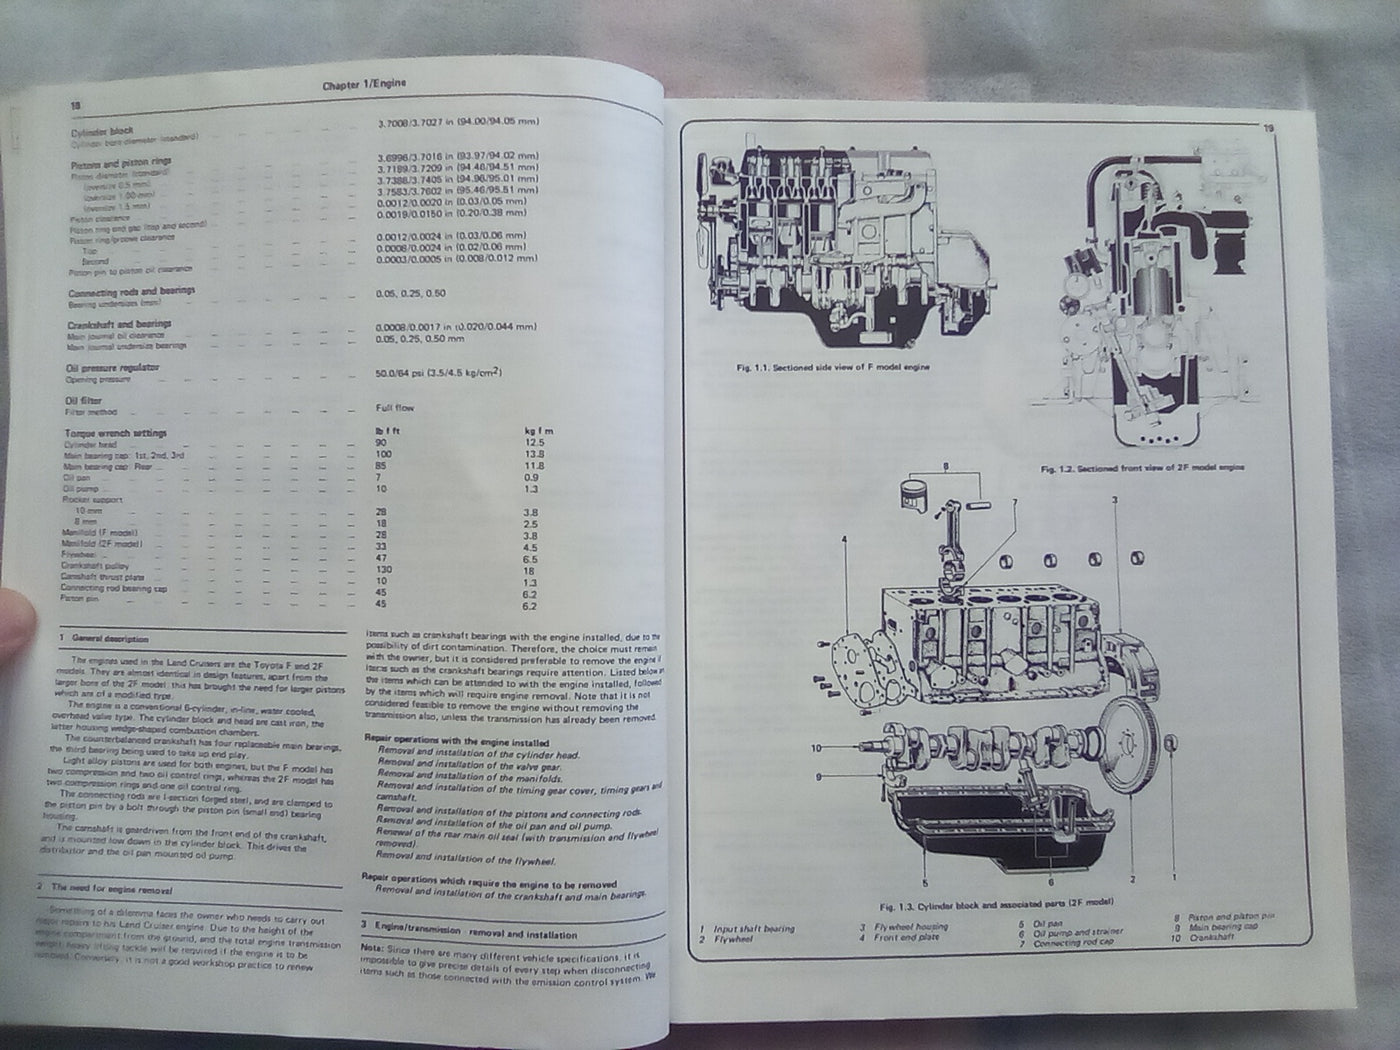 Toyota Land Cruiser Haynes Manual 1968-1982 FJ40,43,45,55 & 60